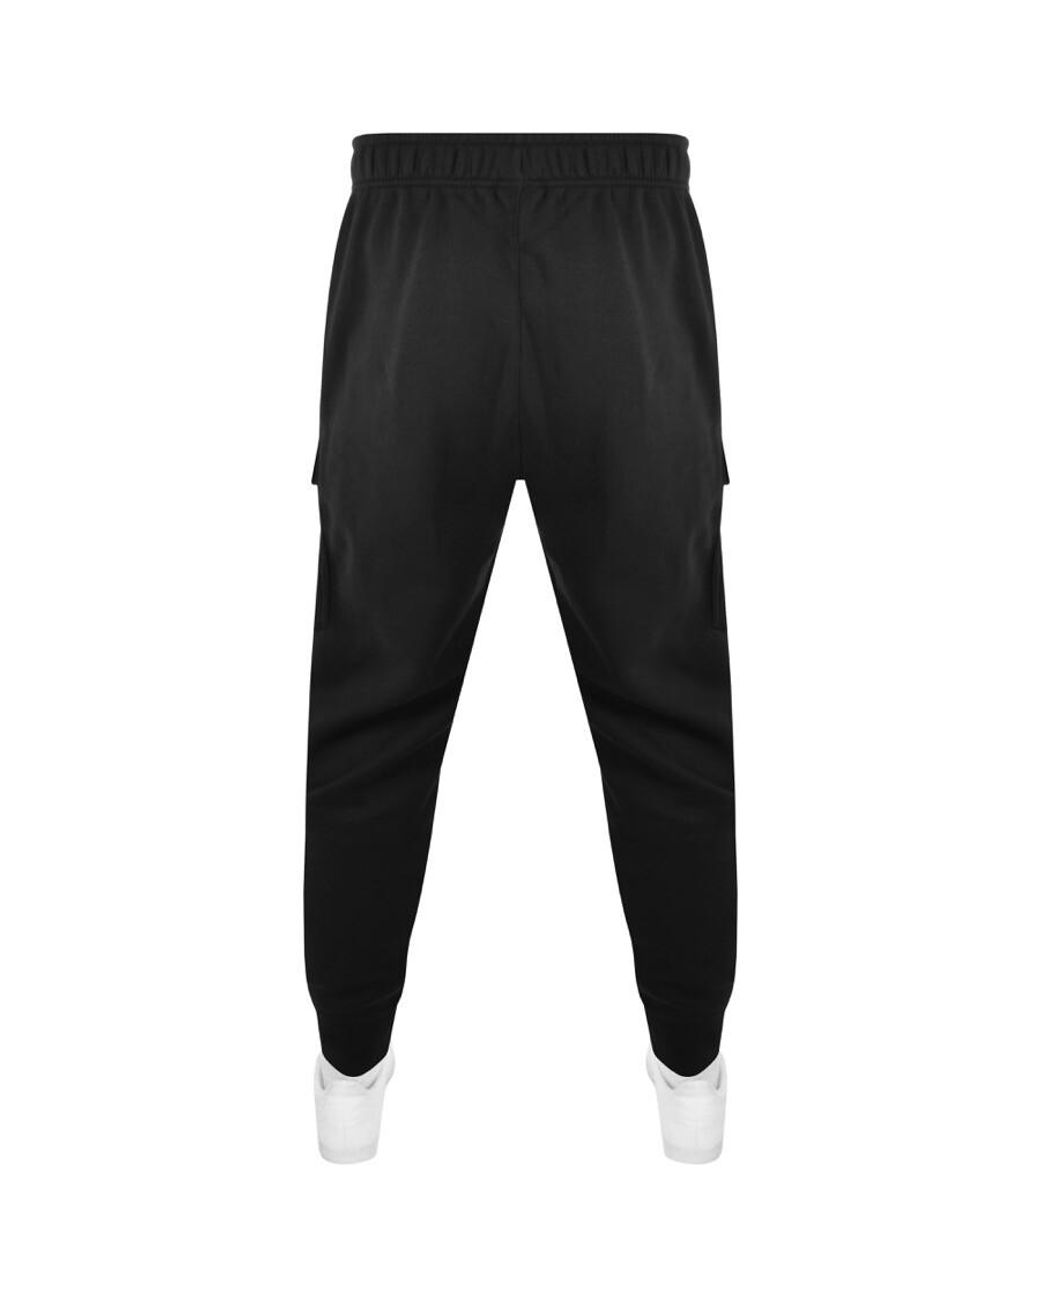 Nike Air Cargo jogging Bottoms in Black for Men